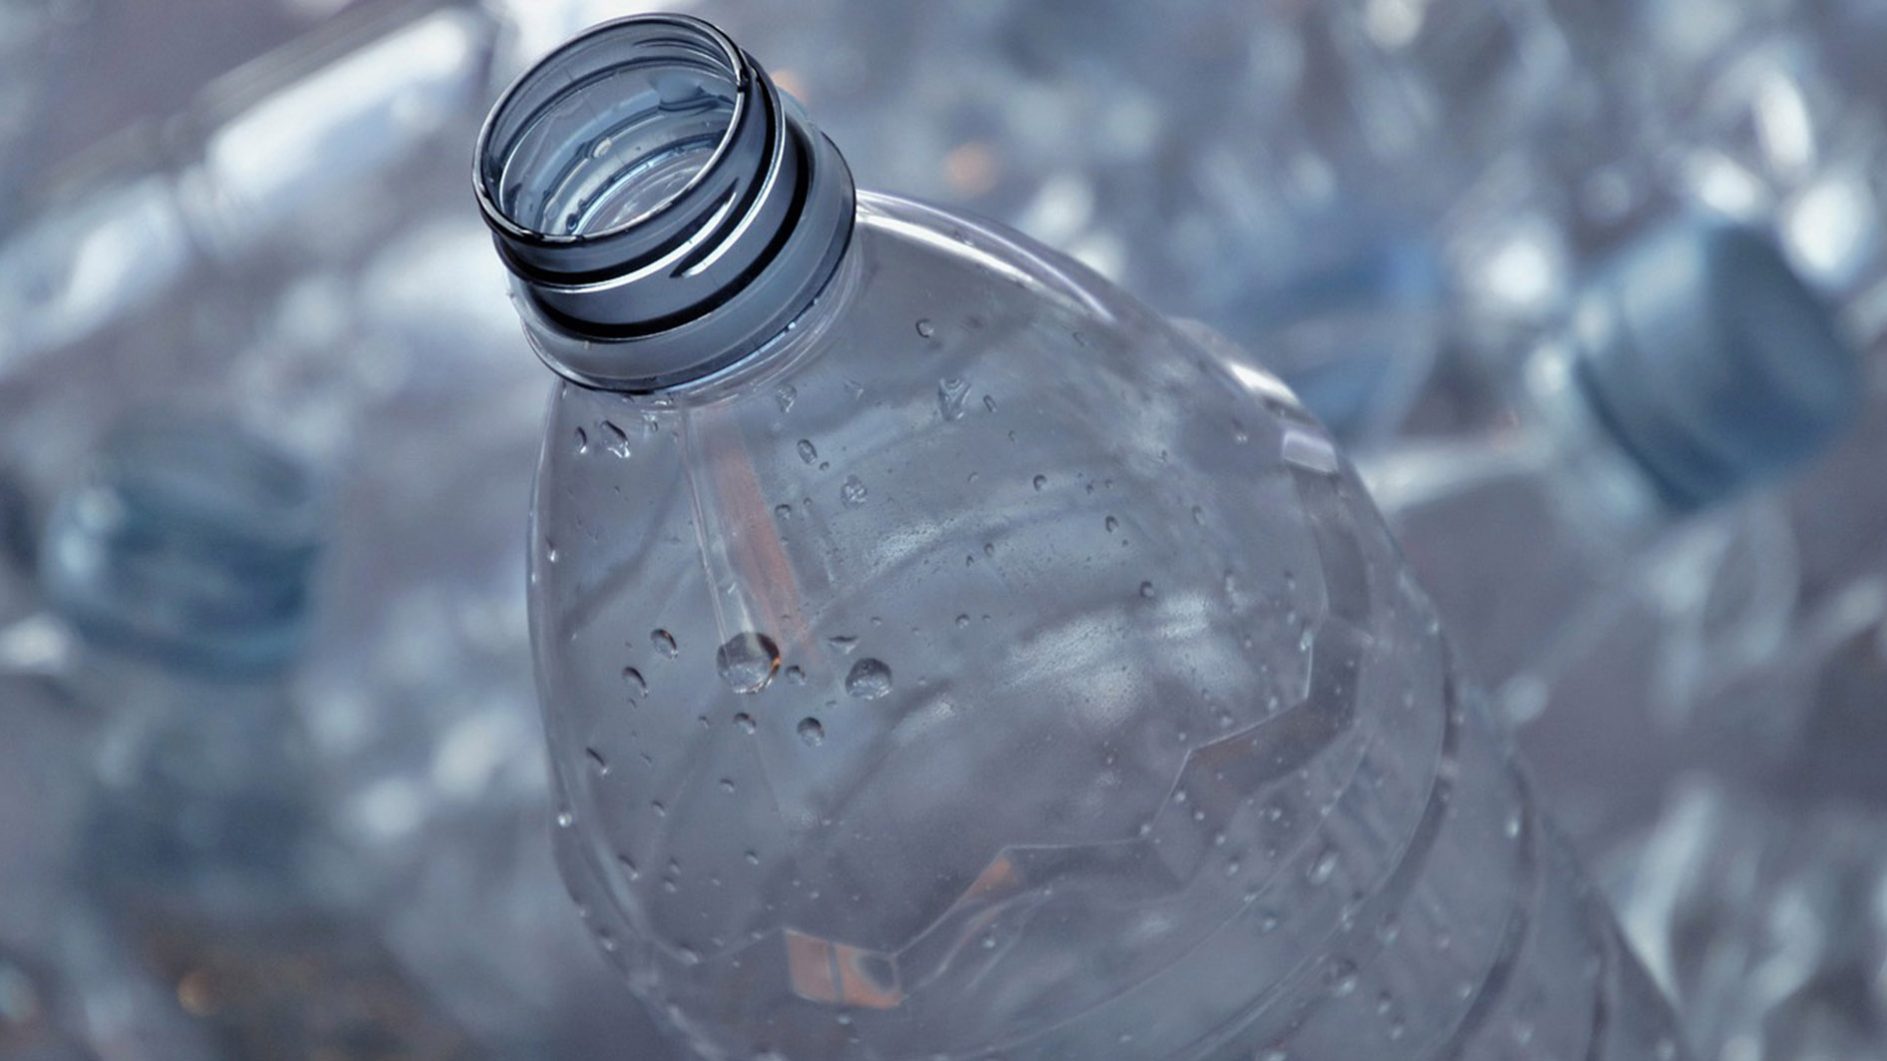 Jual Botol Jakarta Jenis Plastik Dengan Kode Keamanan Pangan